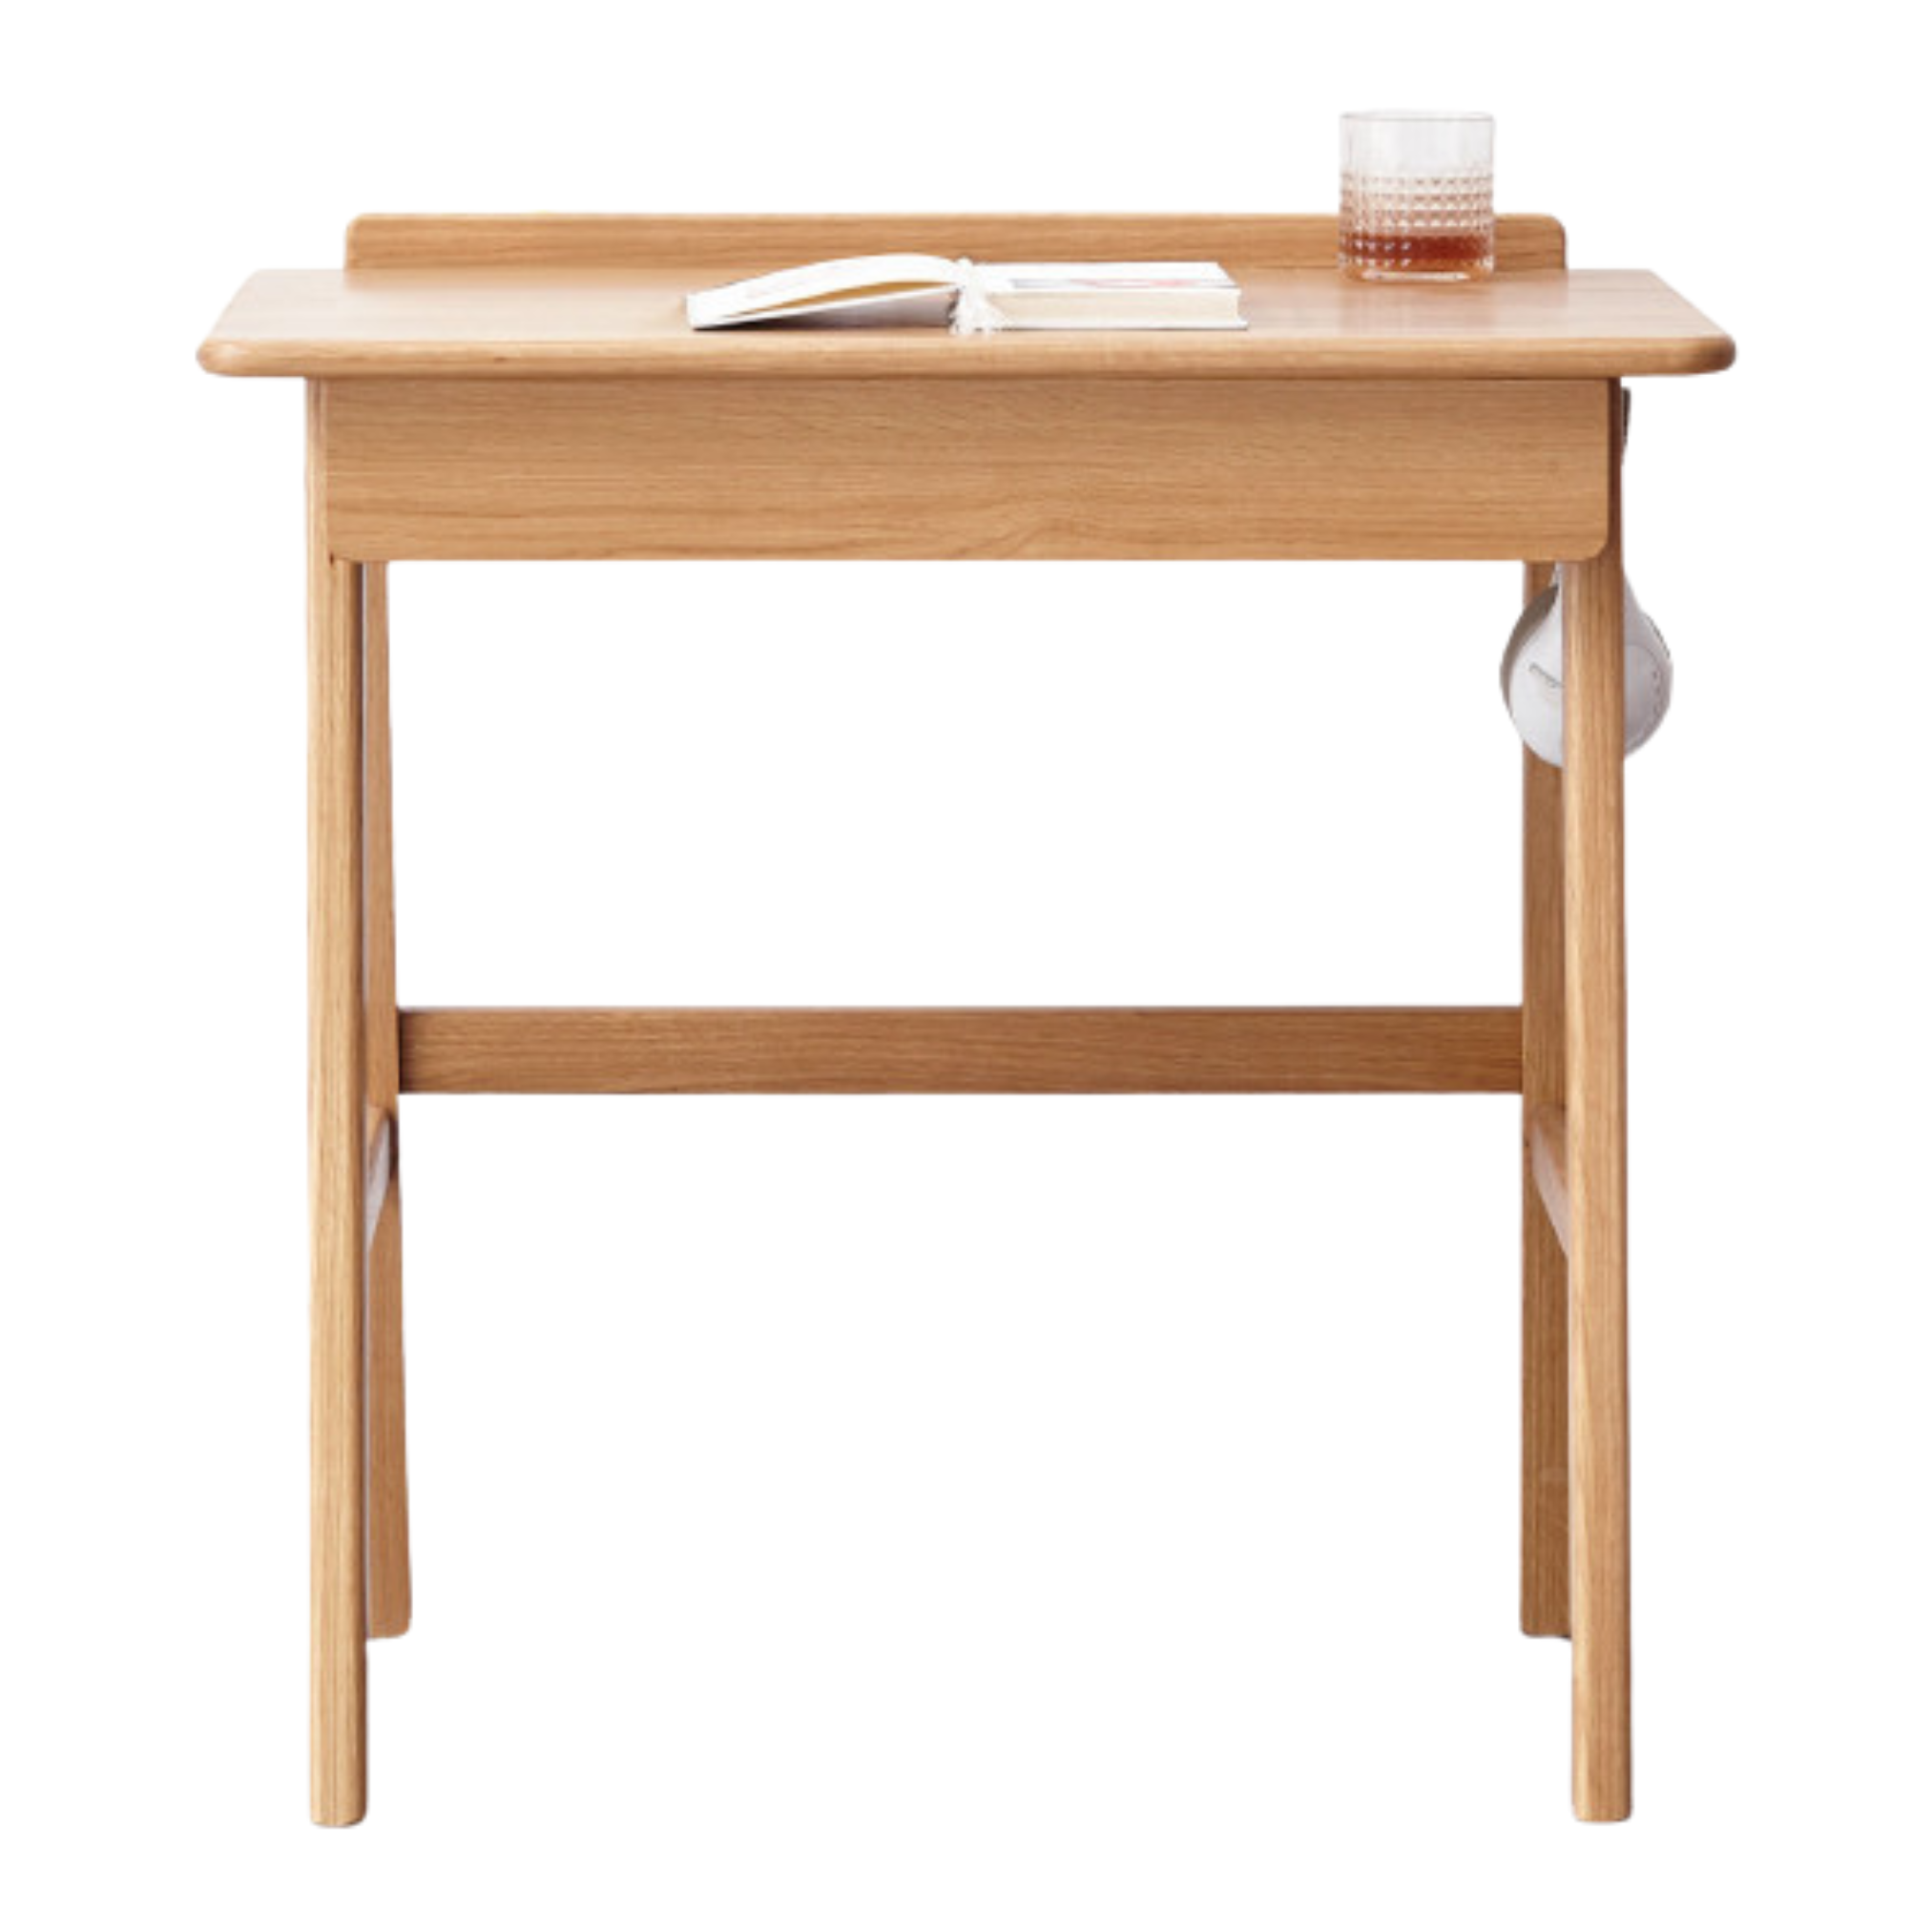 Oak solid wood Office desk, console table: